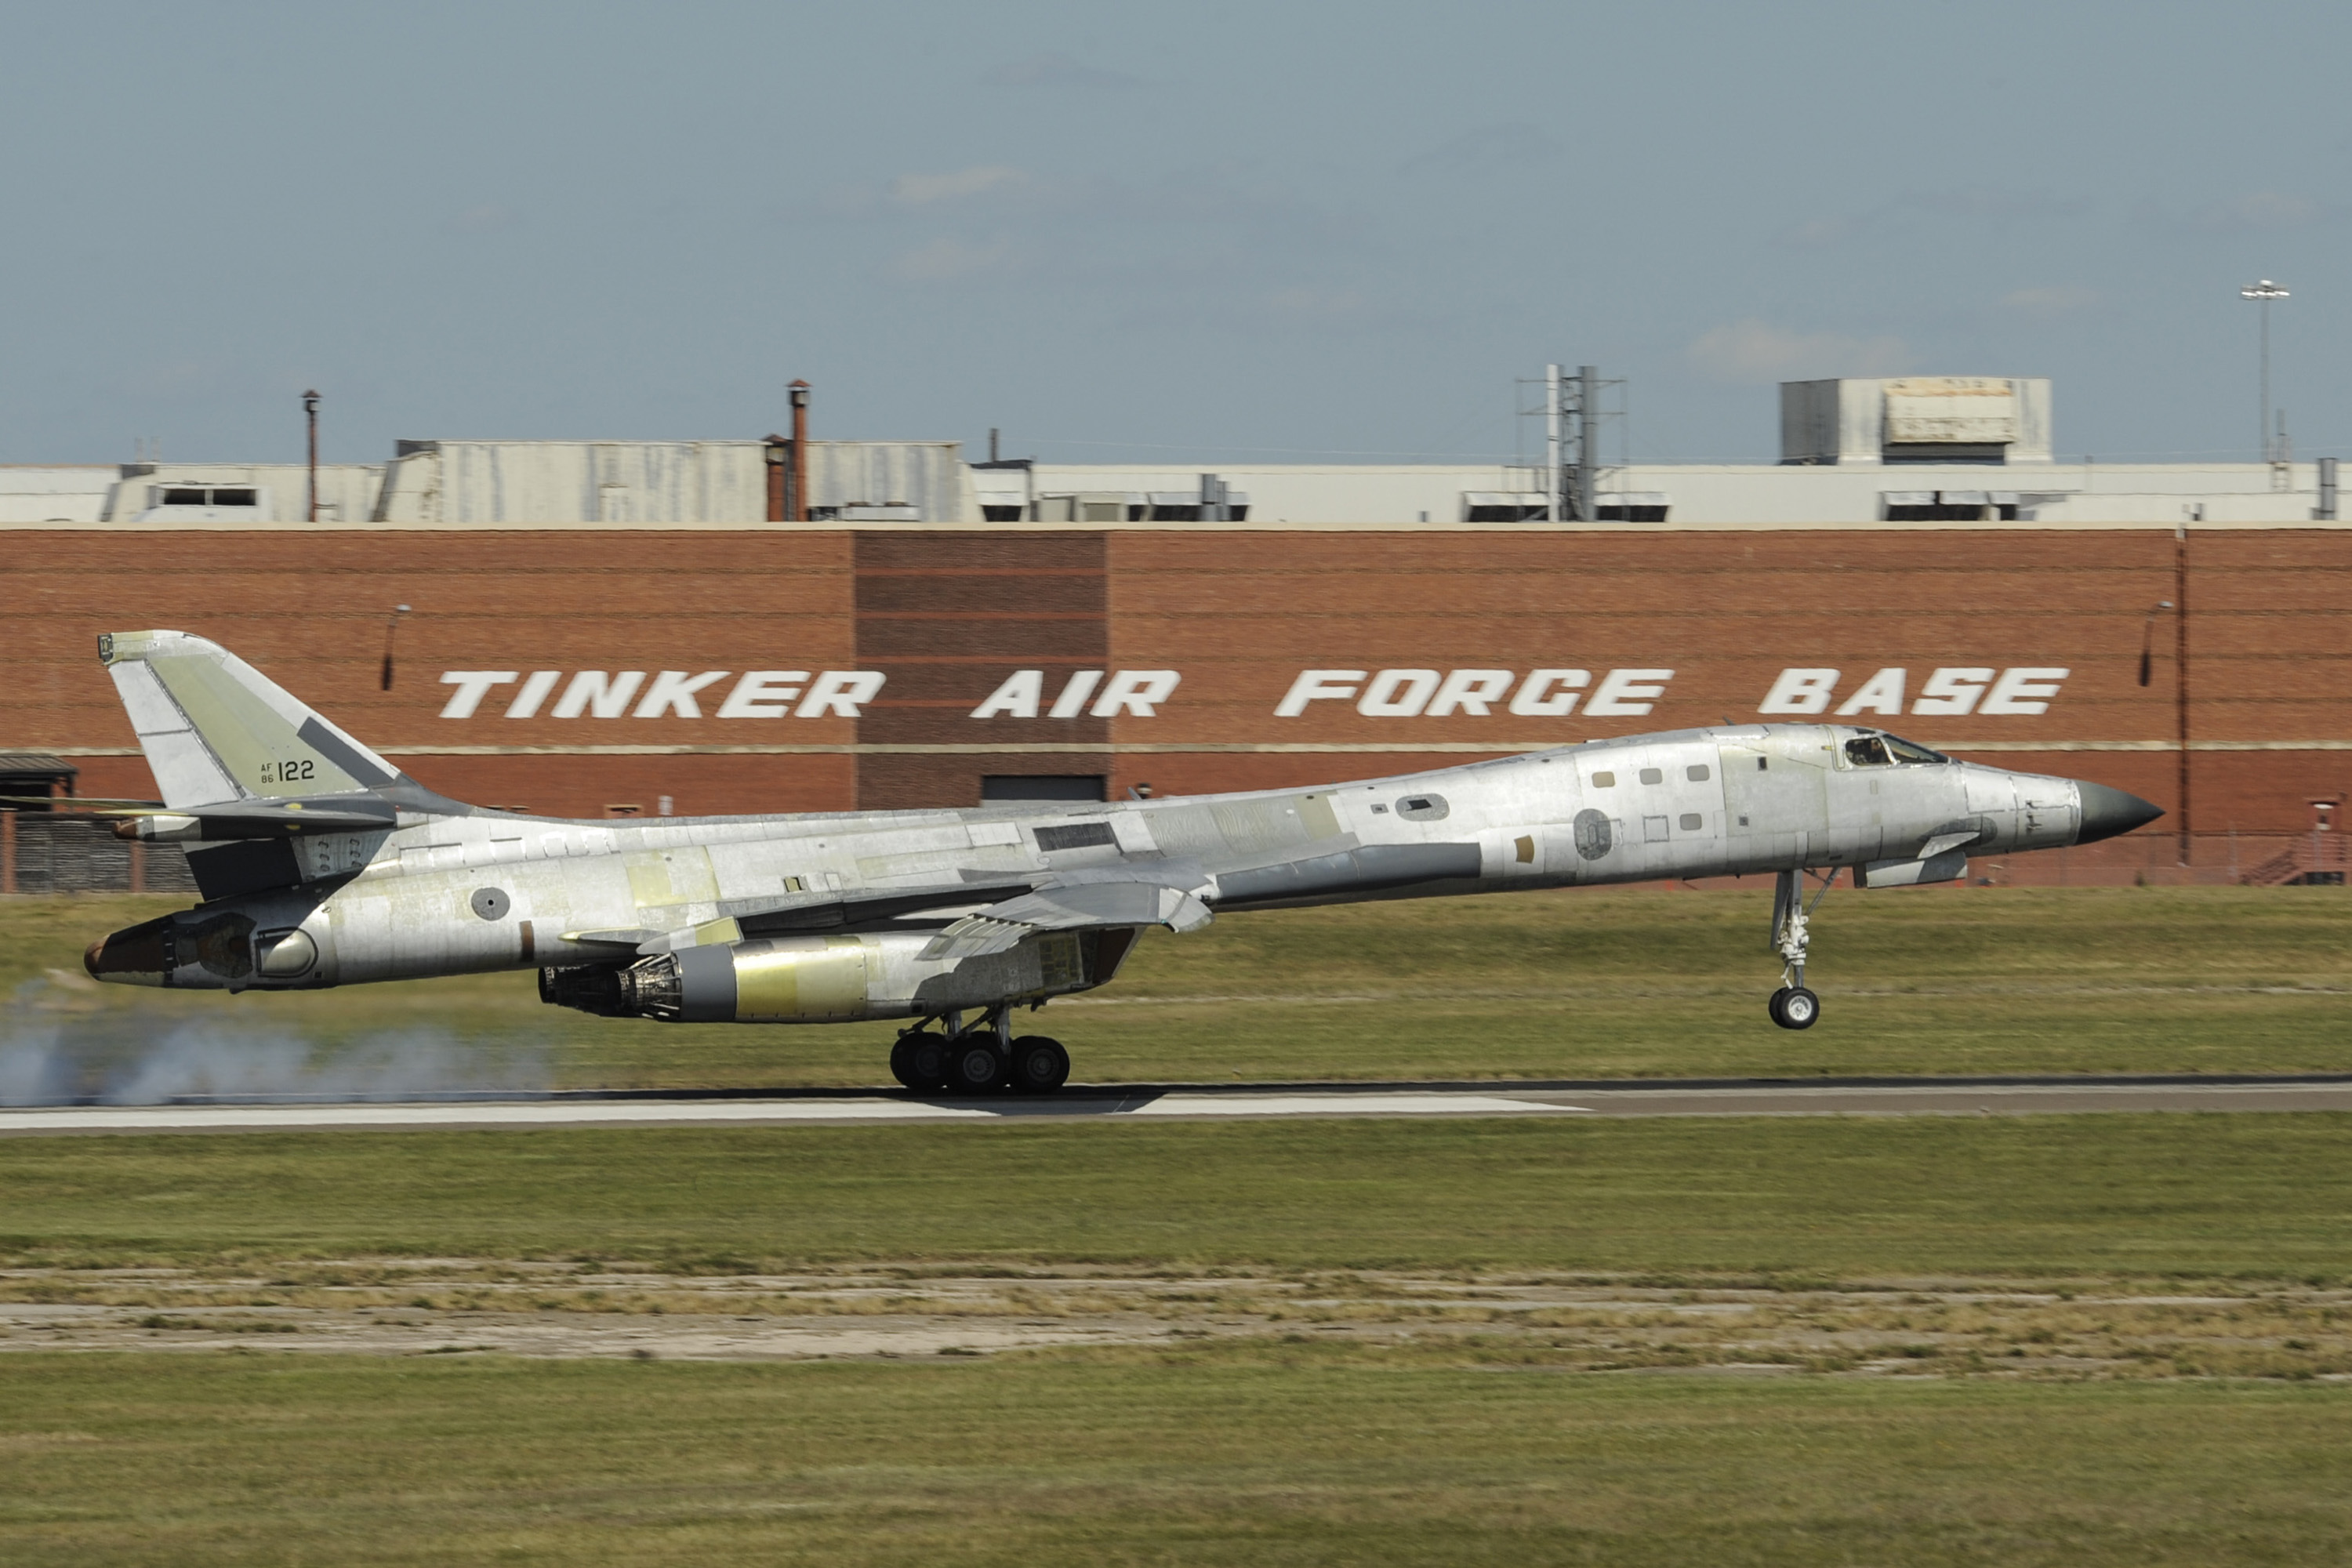 B-1 that made emergency landing in Midland, TX flown to OK